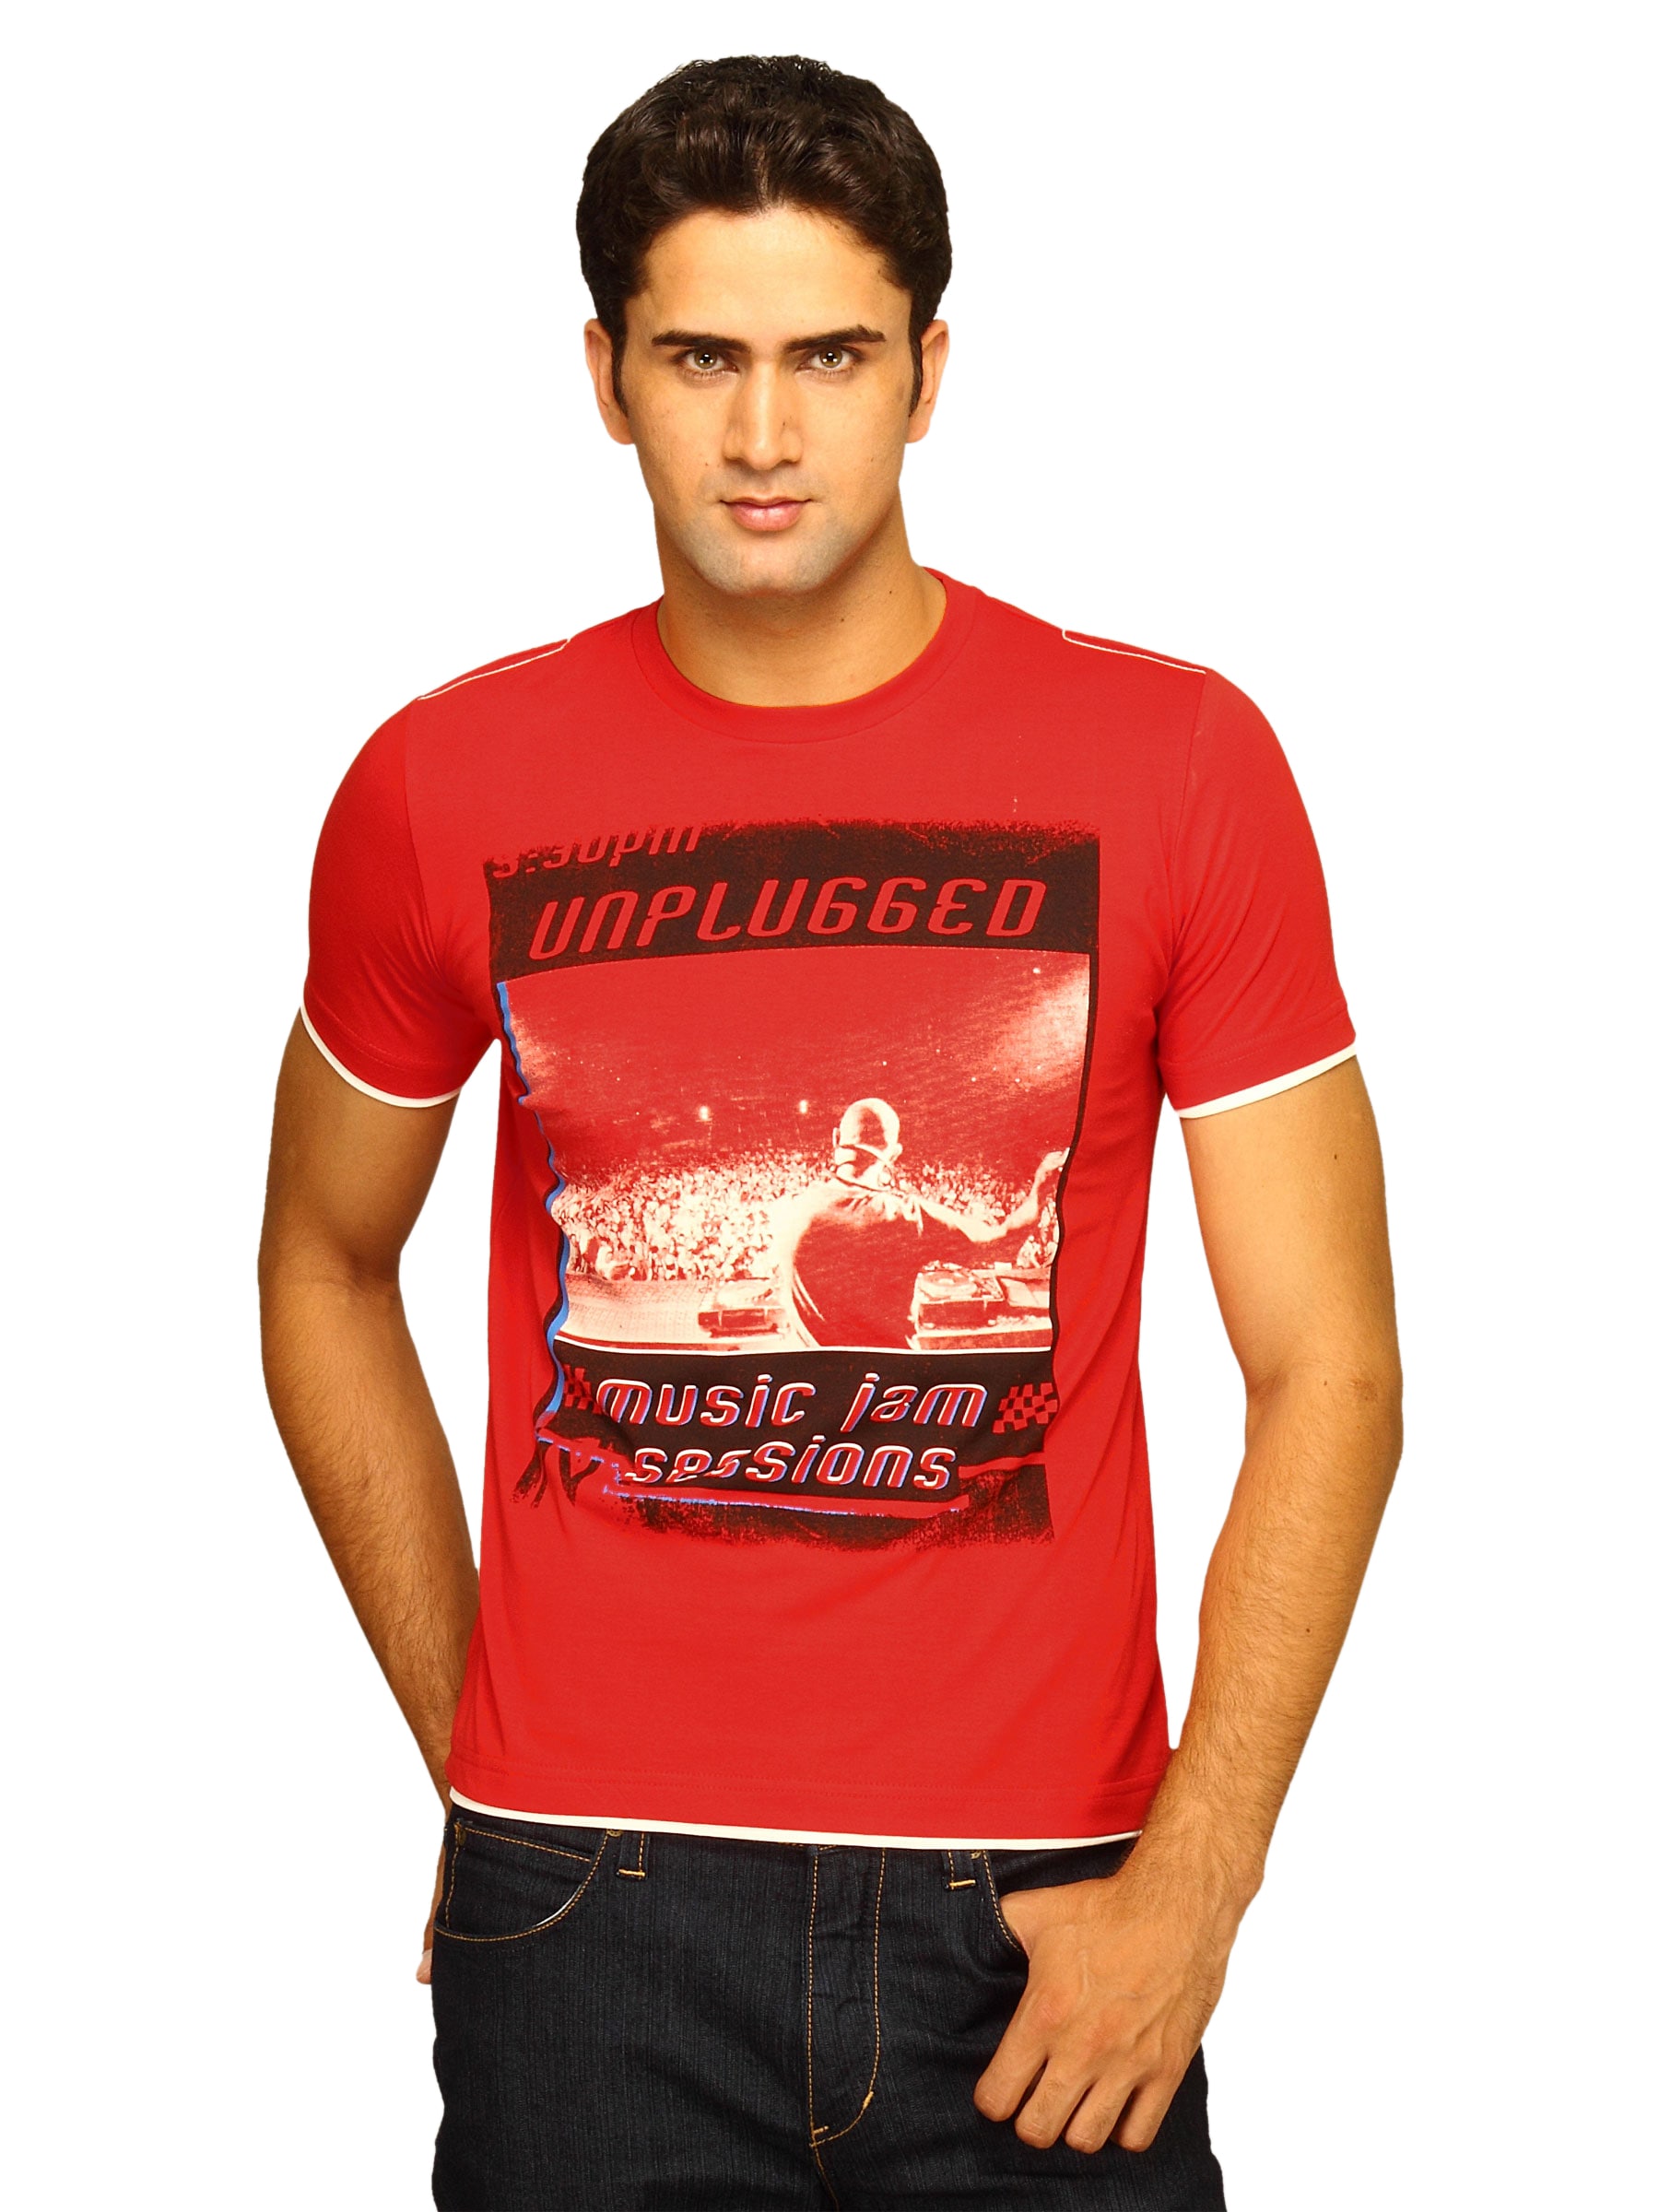 Status Quo Men's Unplugged Red T-shirt